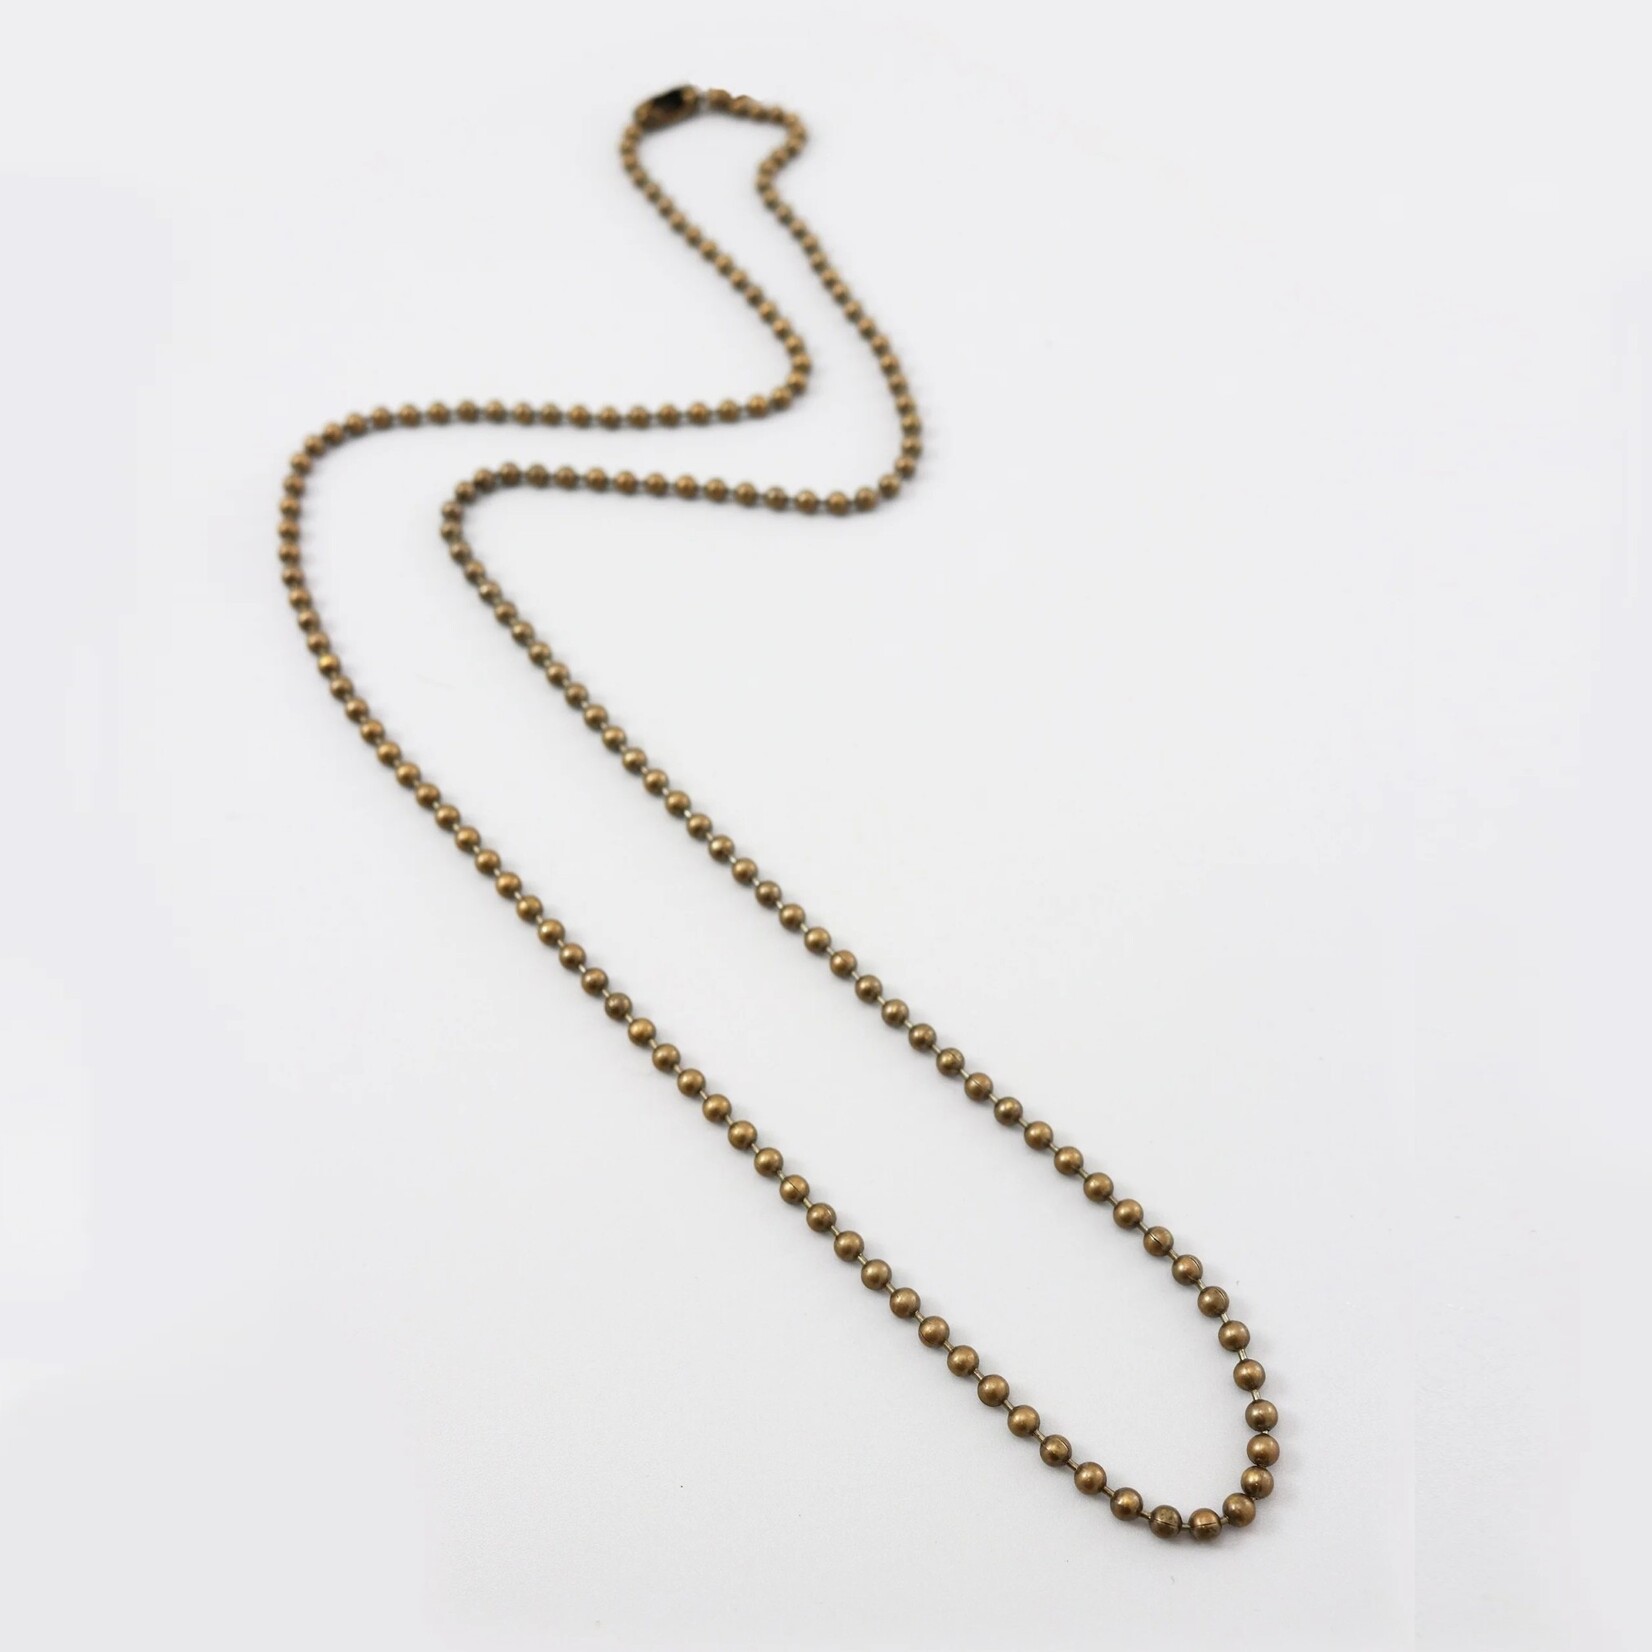 Vintaj Brass Ball Chain Necklace 28" - Ready to Wear